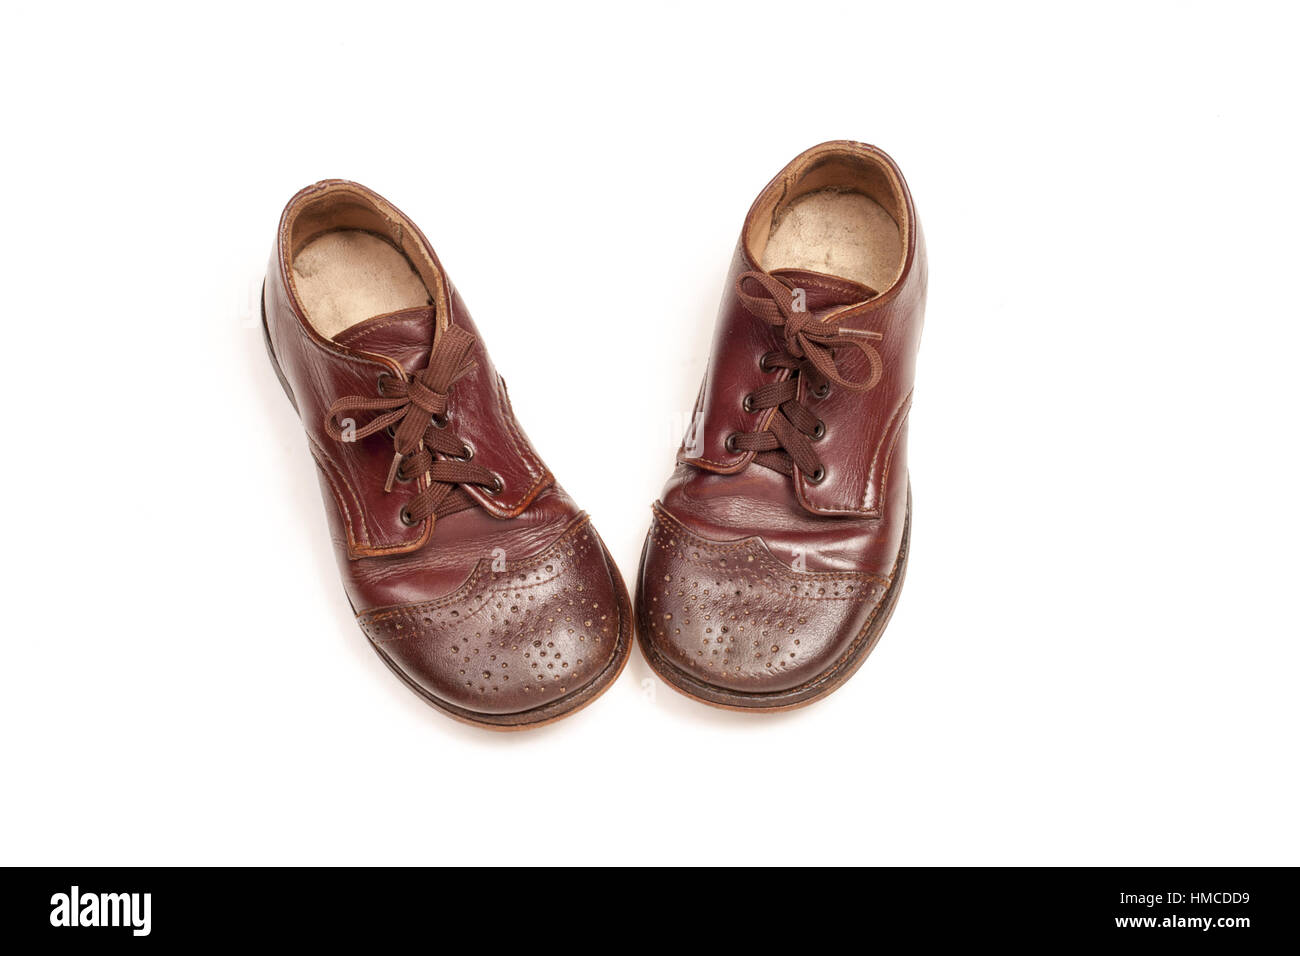 Vintage Child Shoes High Resolution 